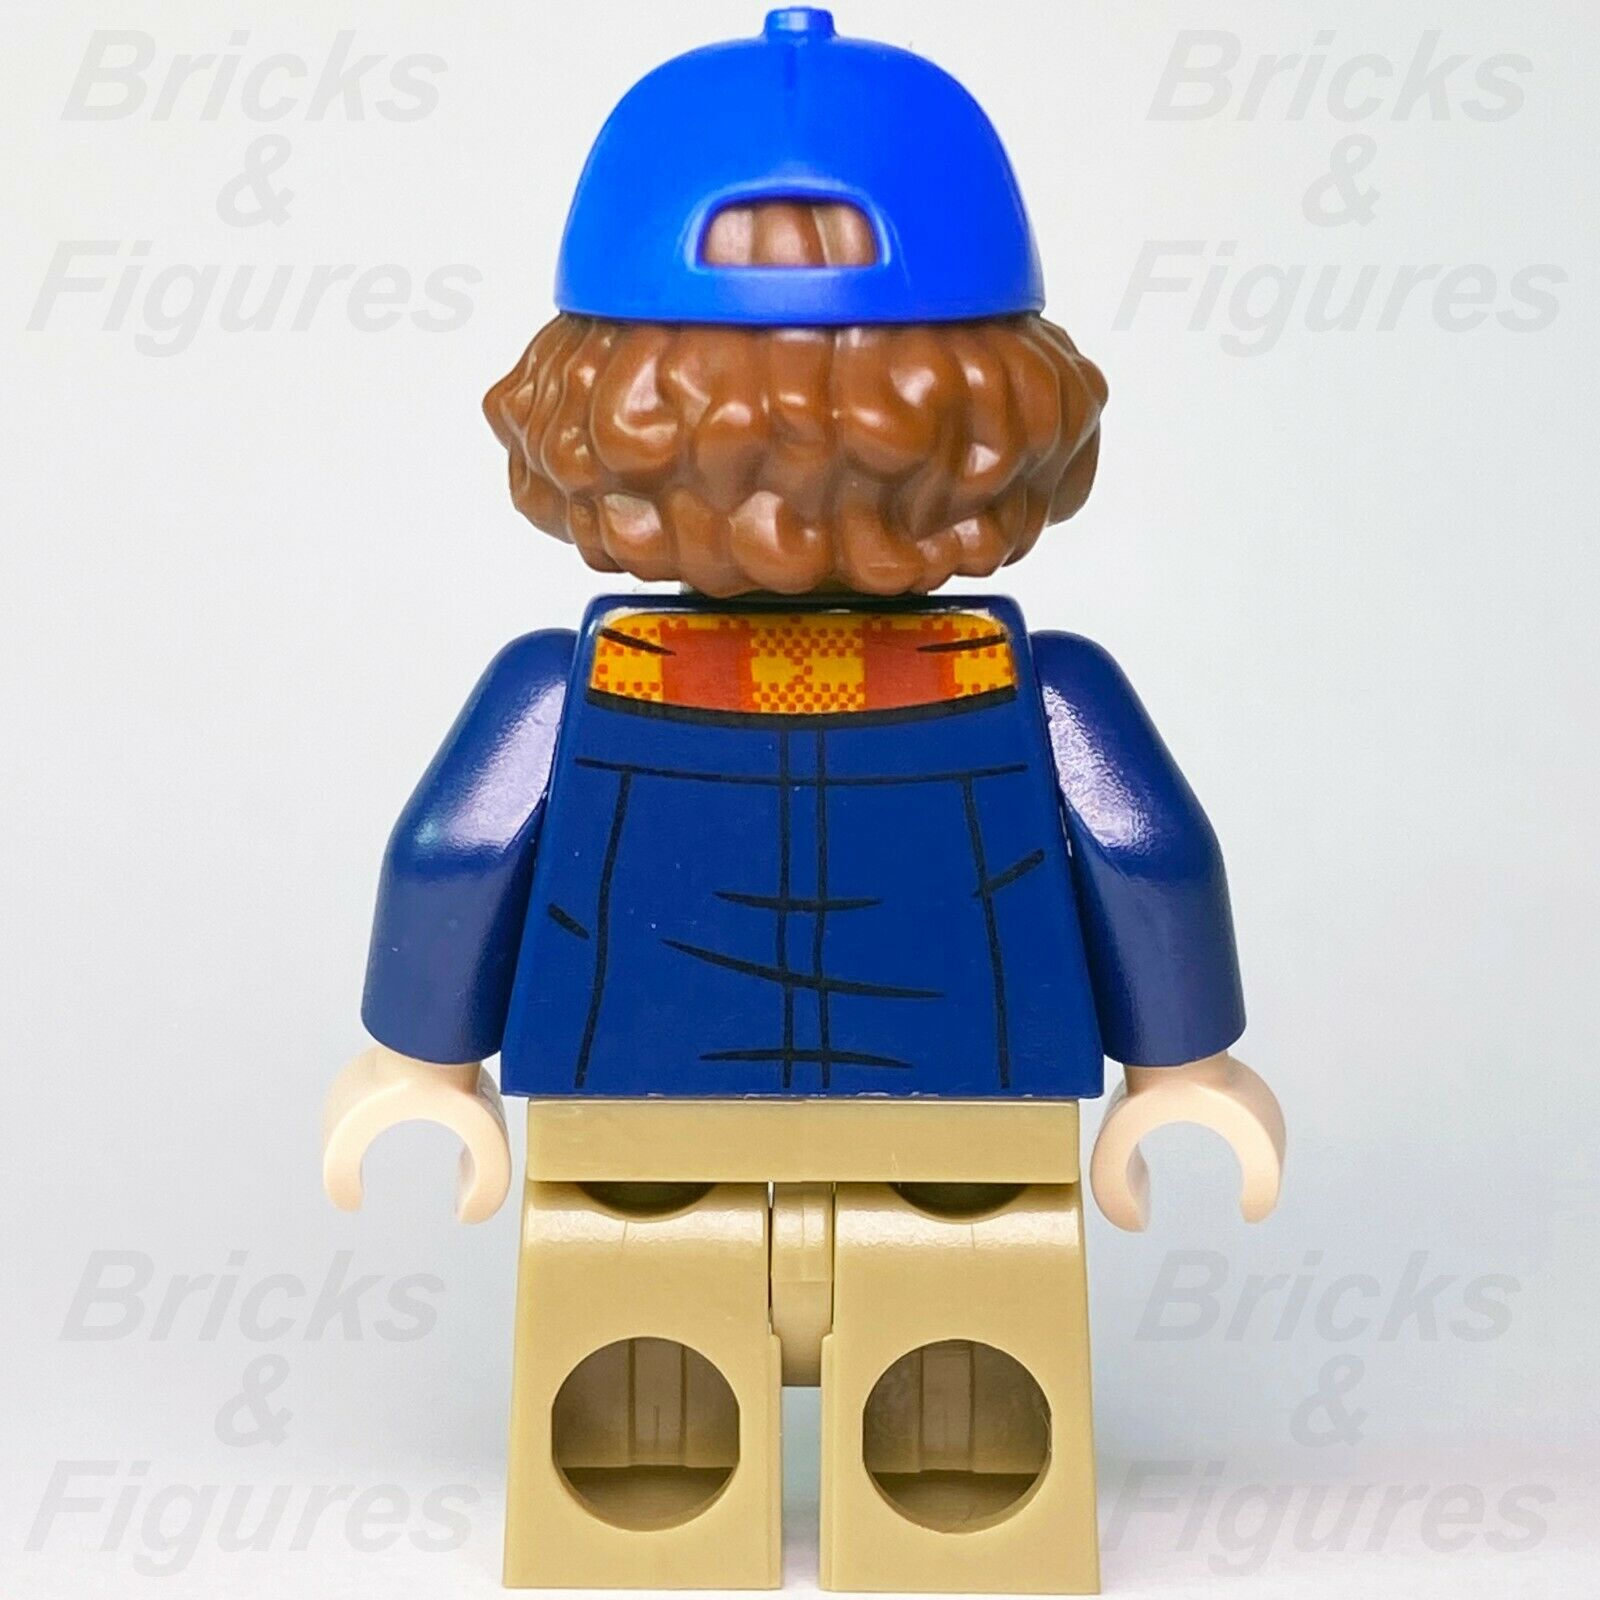 New Stranger Things LEGO Dustin Henderson Netflix TV Series Minifigure 75810 - Bricks & Figures